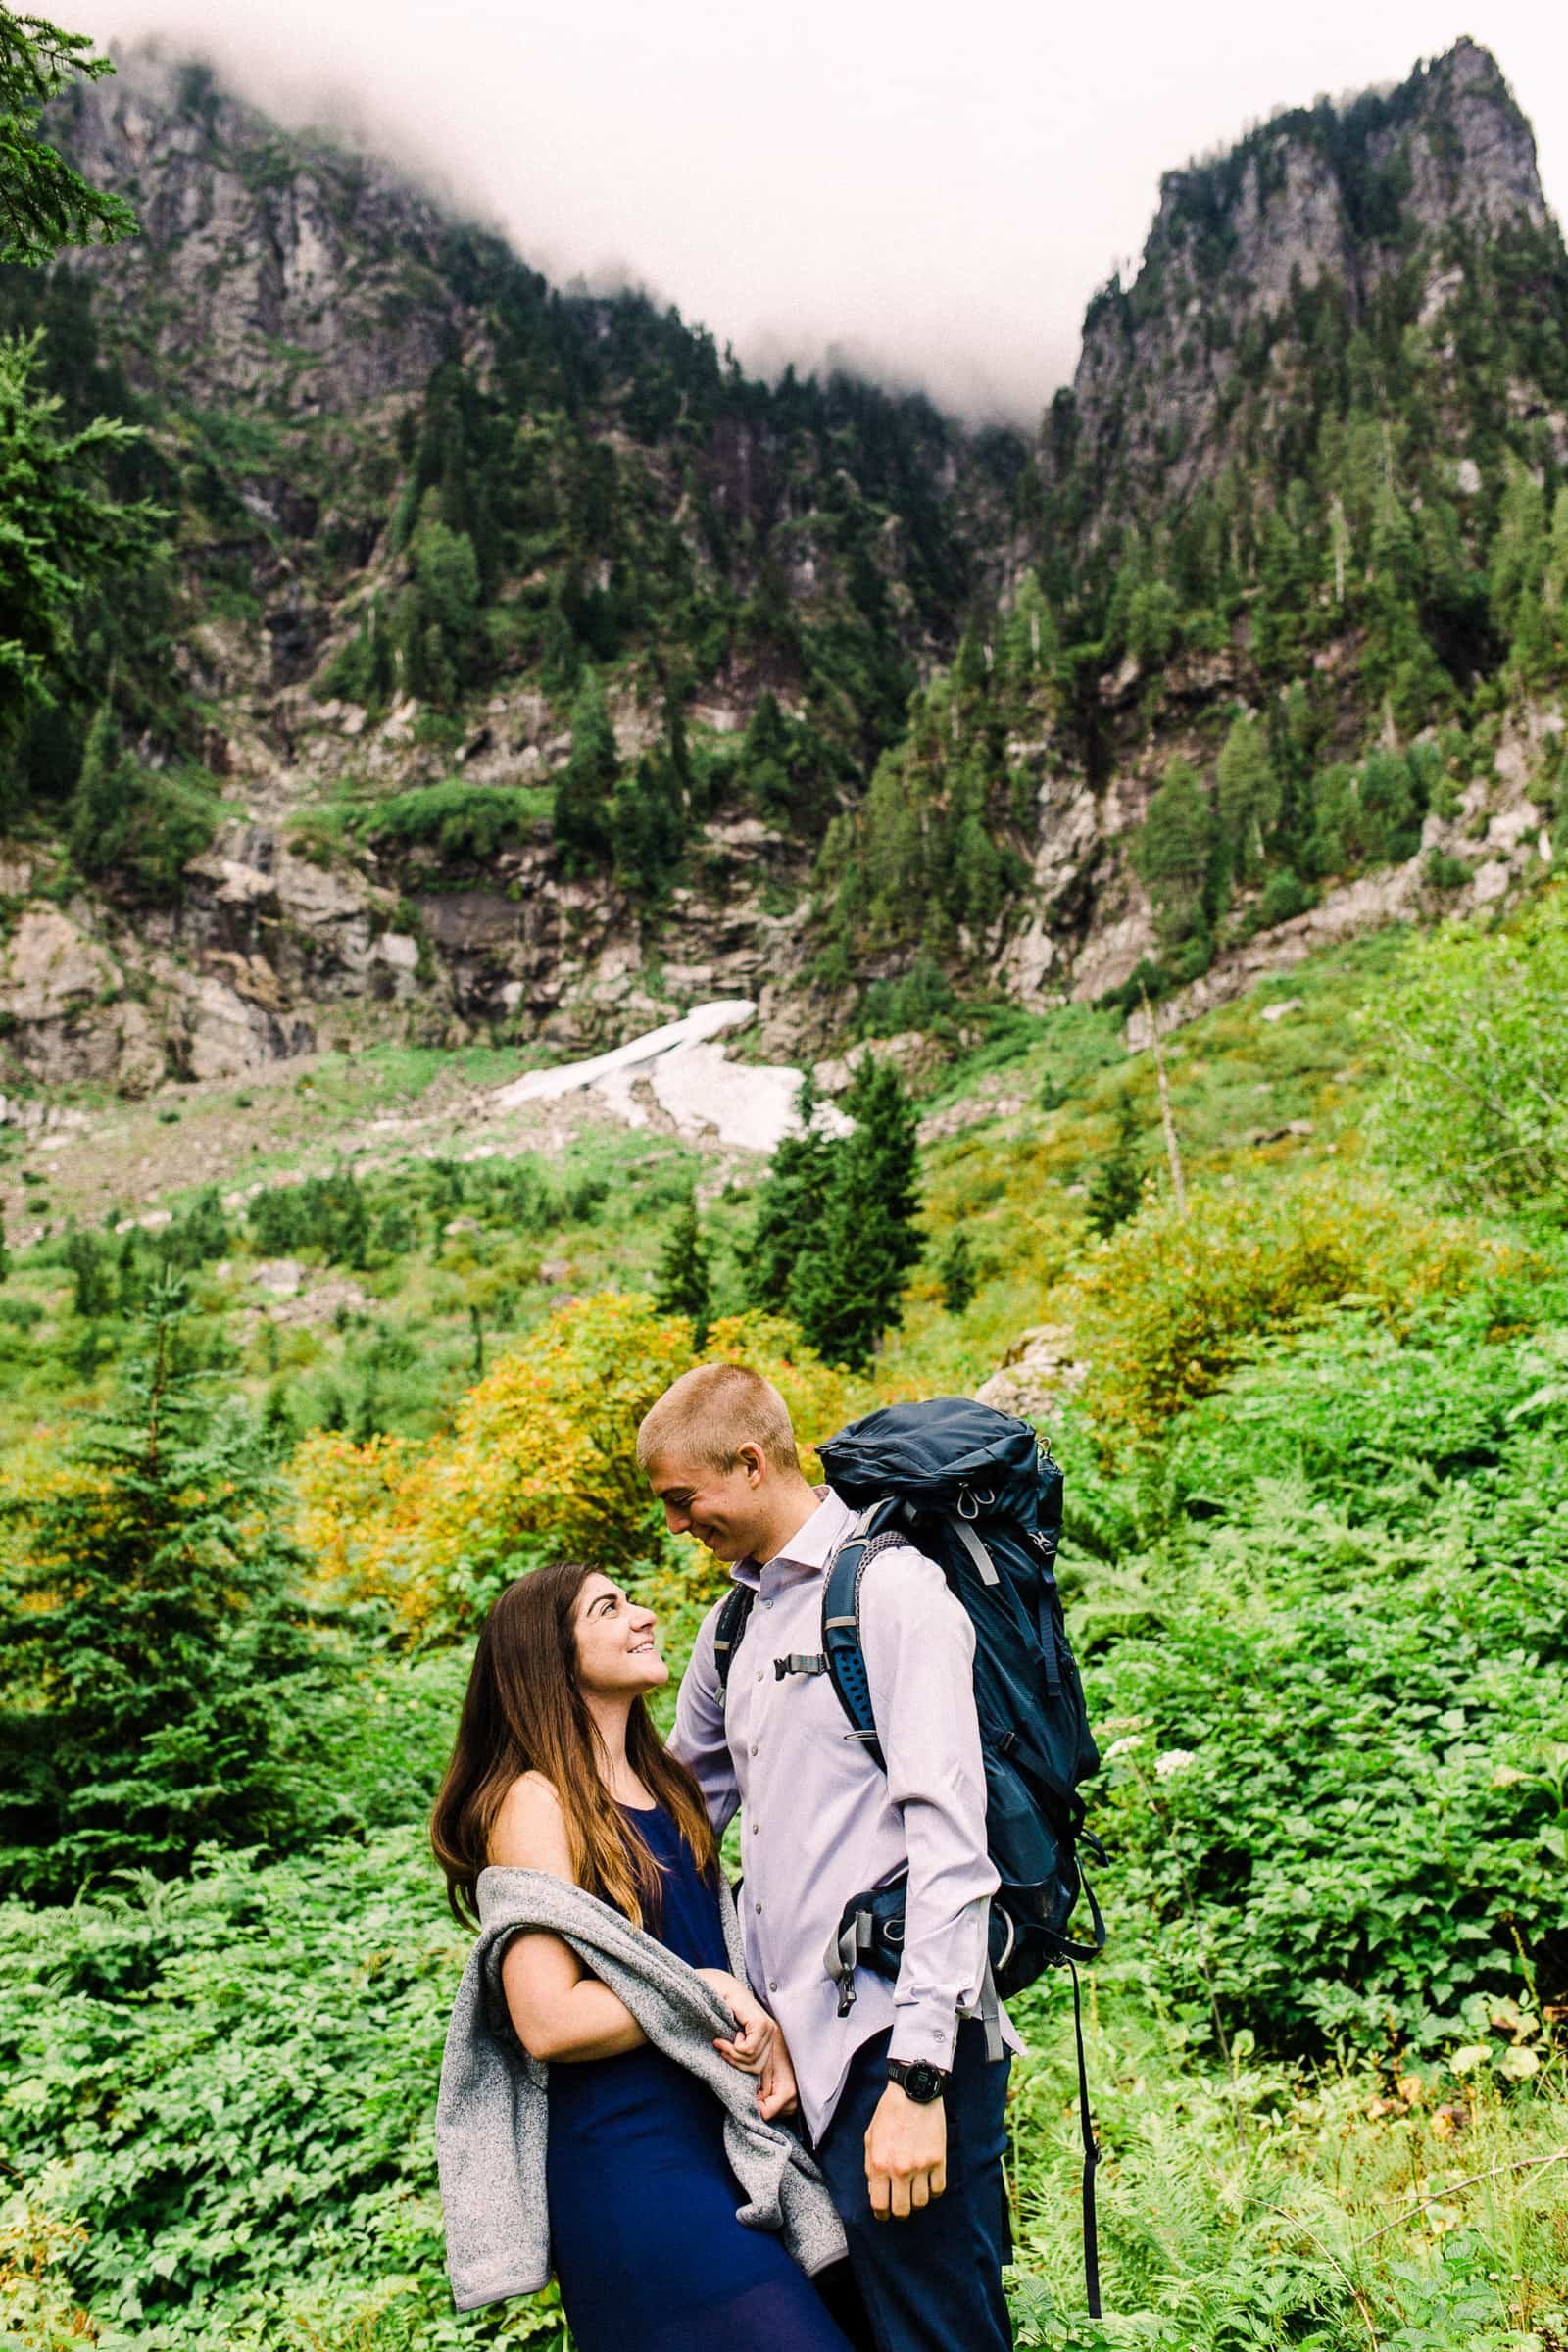 Couple backpacking in Washington mountains